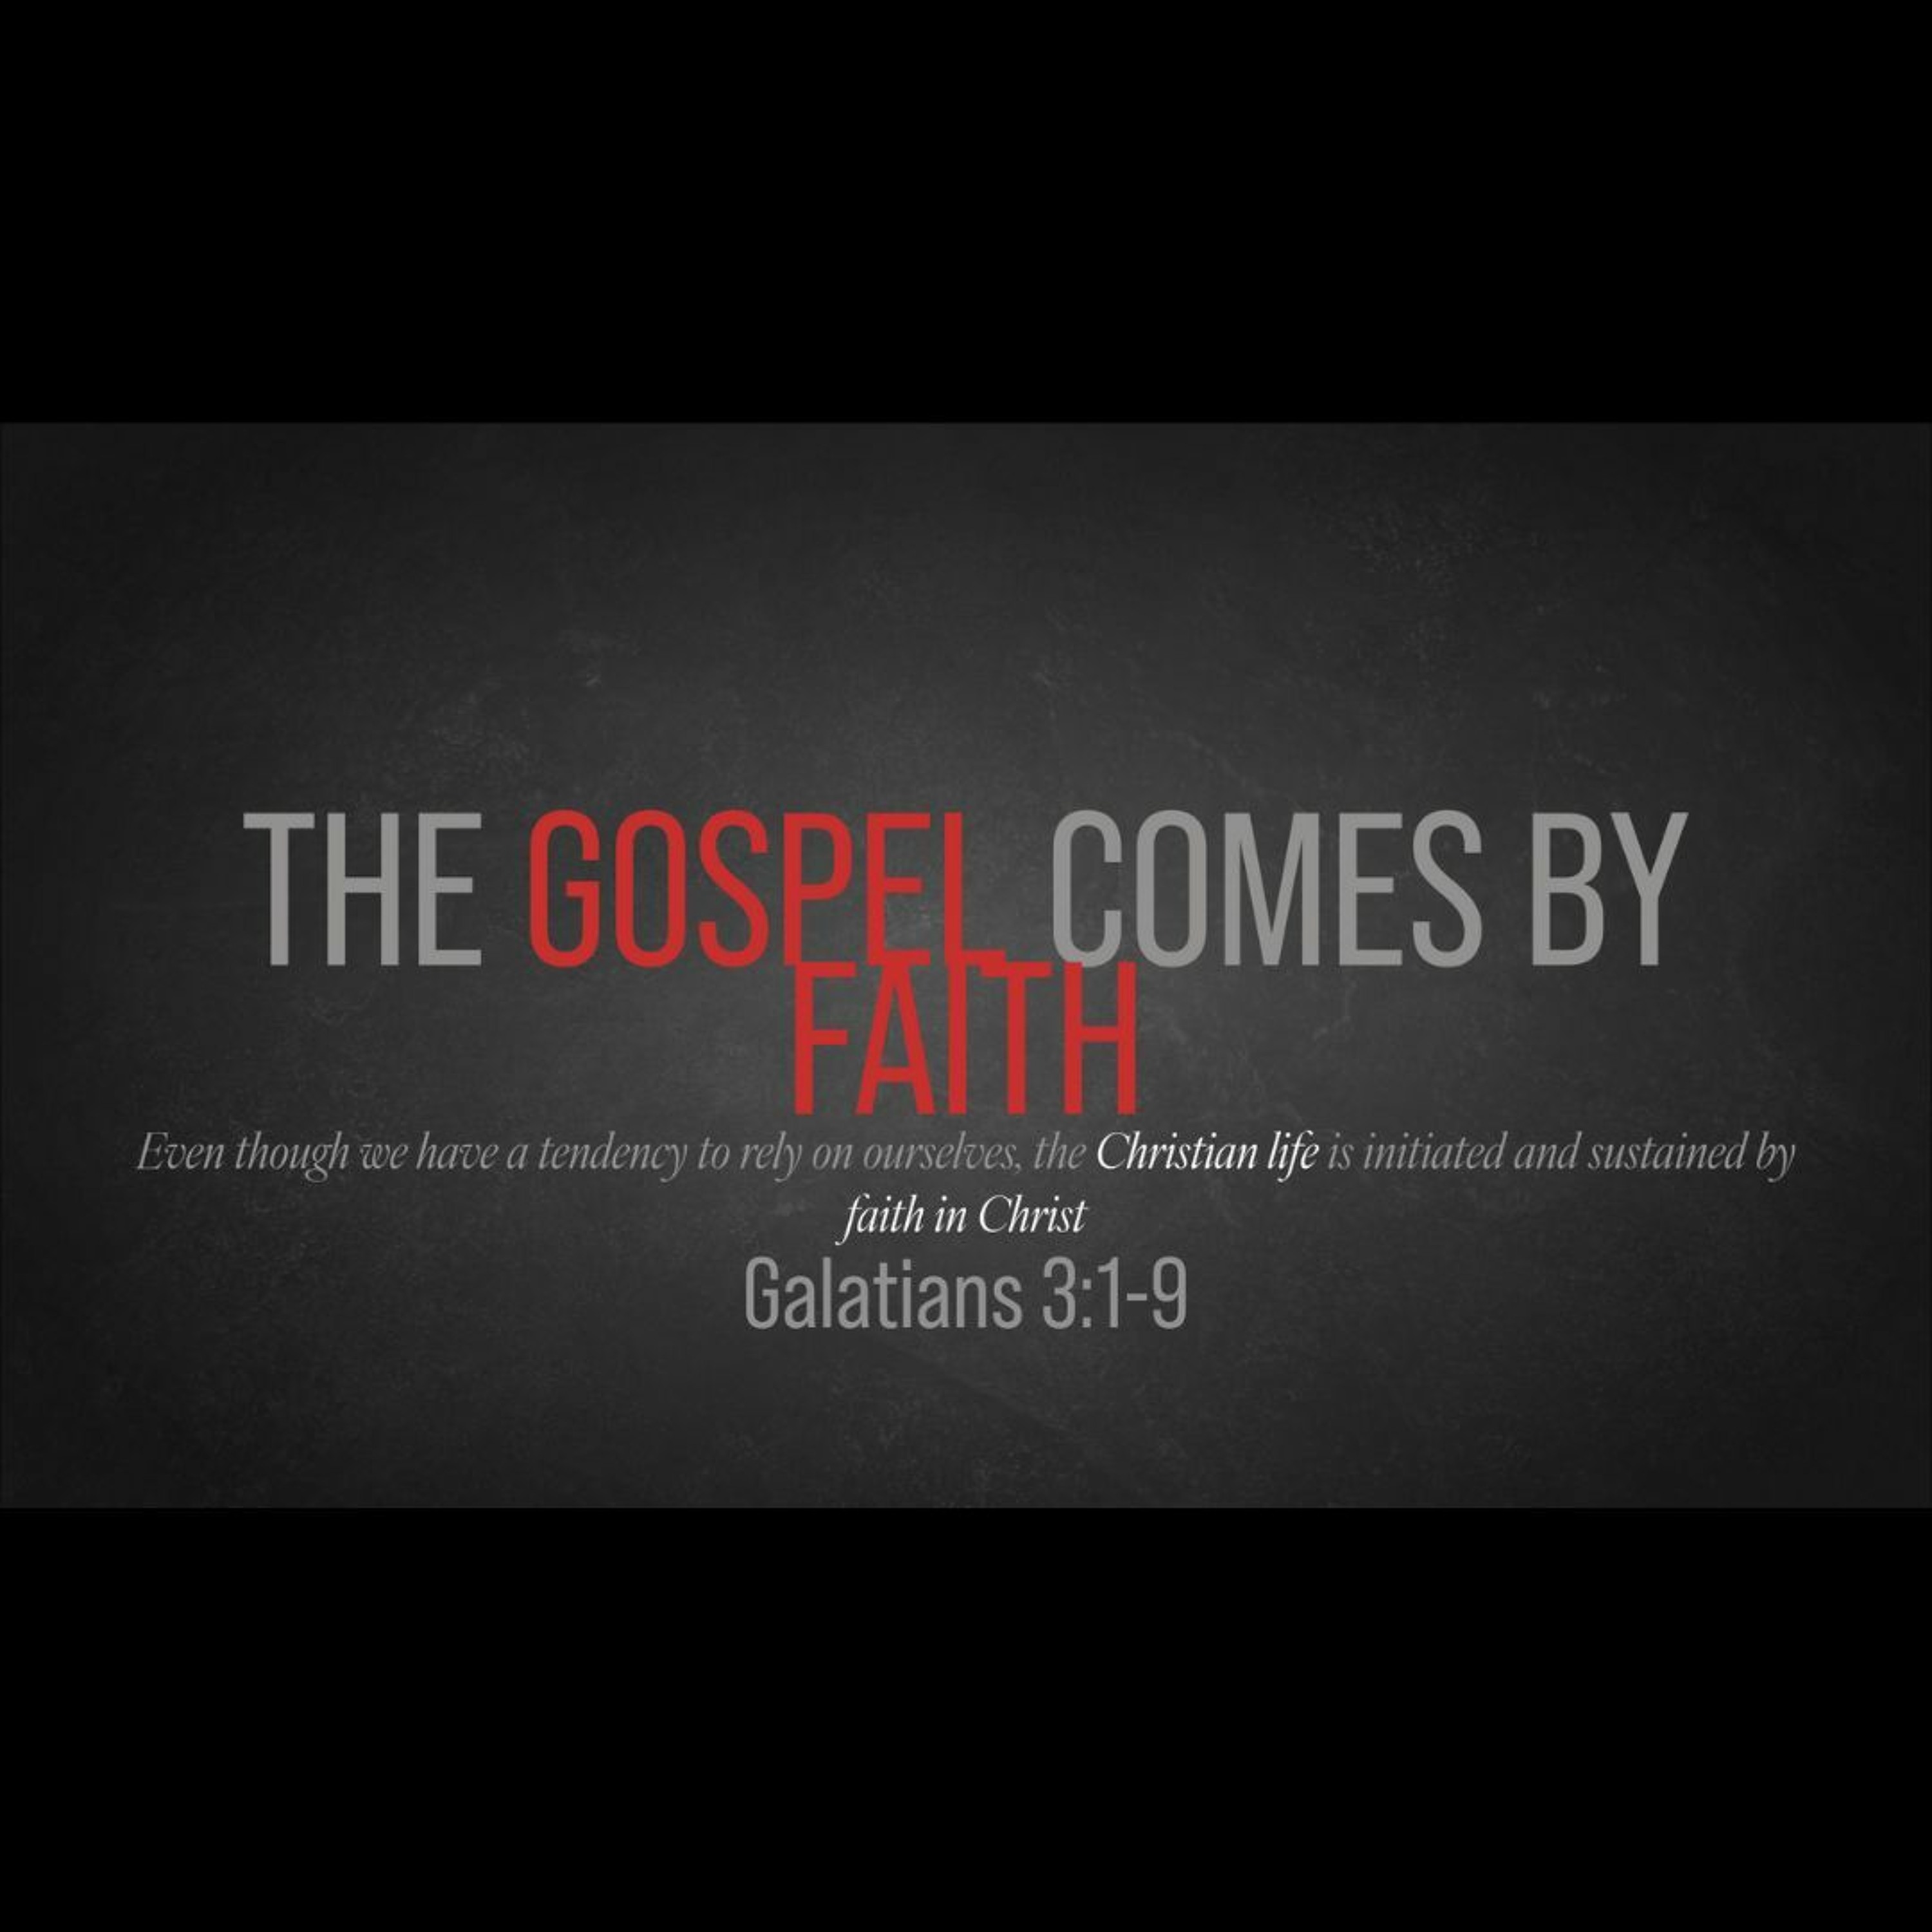 The Gospel Comes by Faith (Galatians 3:1-9)